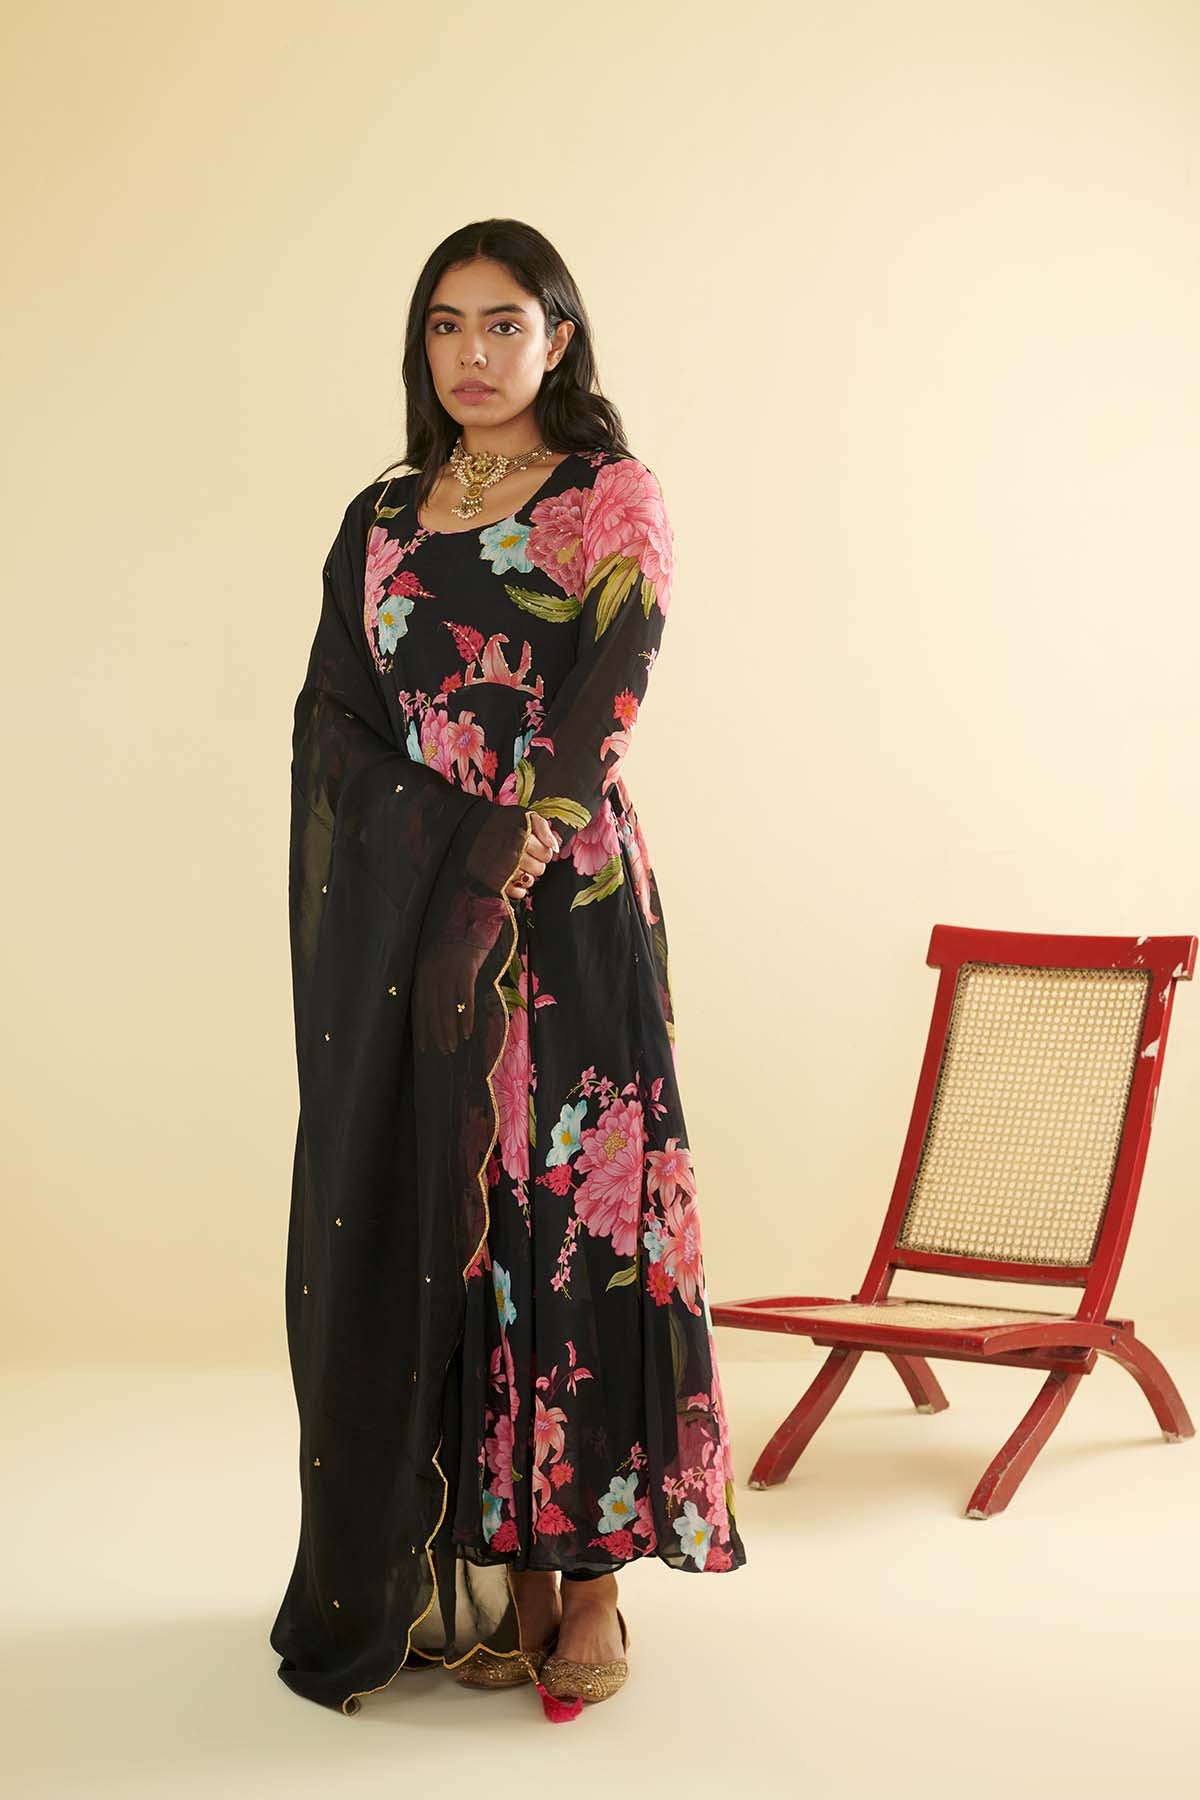 Floral Fiesta Black printed Anarkali with Chooridar and Dupatta- Set of 3